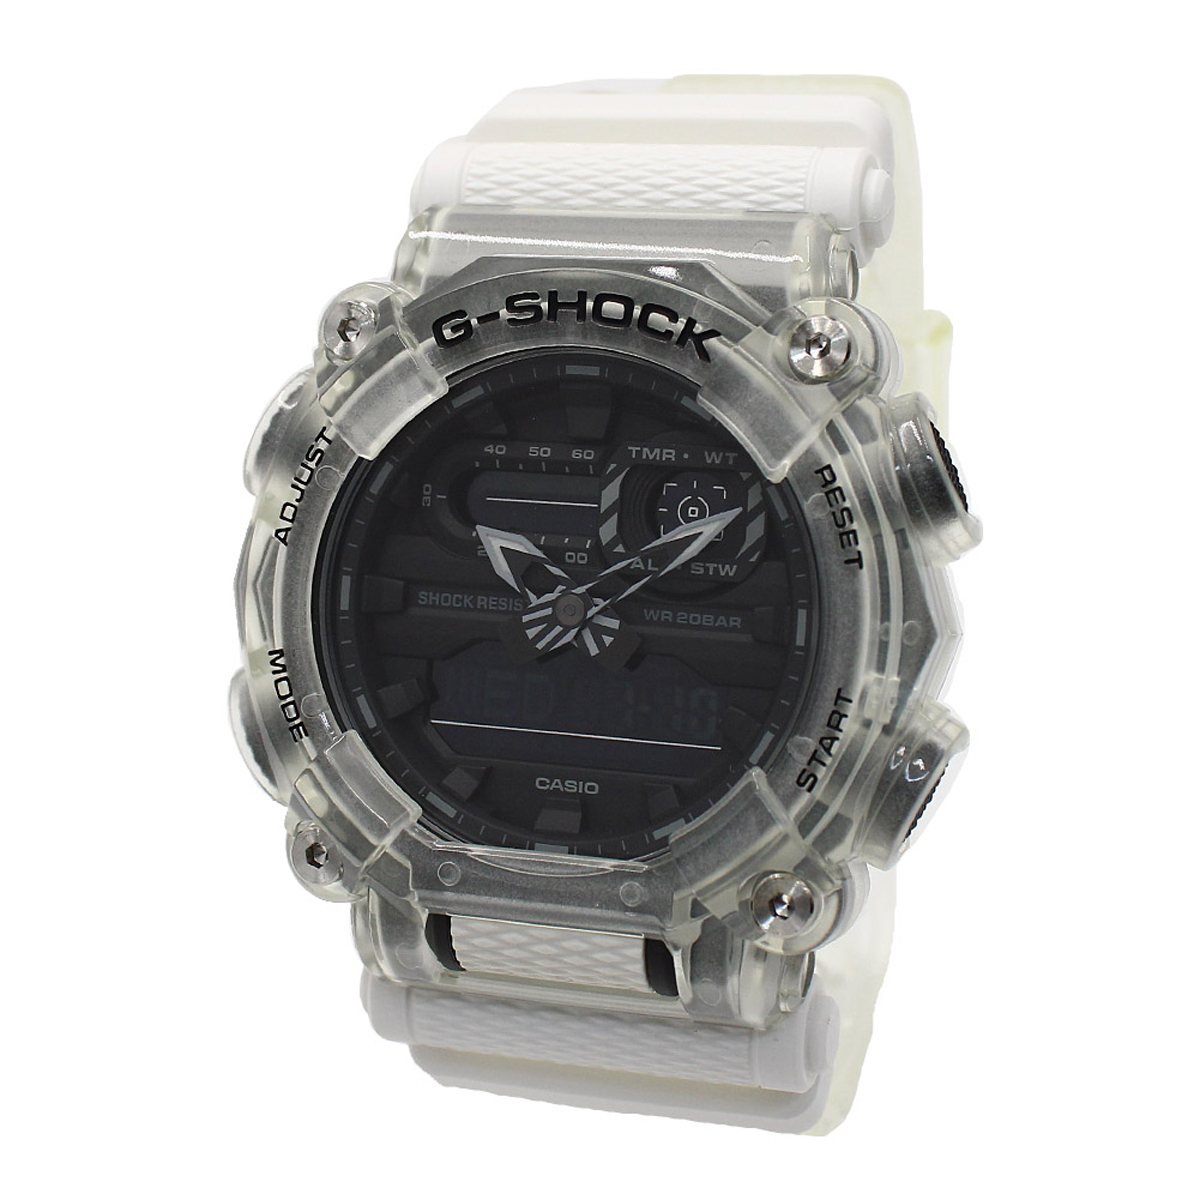 CASIO カシオ G-SHOCK Gショック GA-900SKL-7ADR ANALOG-DIGITAL GA-900 SERIES 腕時計 ウォッチ メンズ 海外正規品 腕時計 時計 ブラン